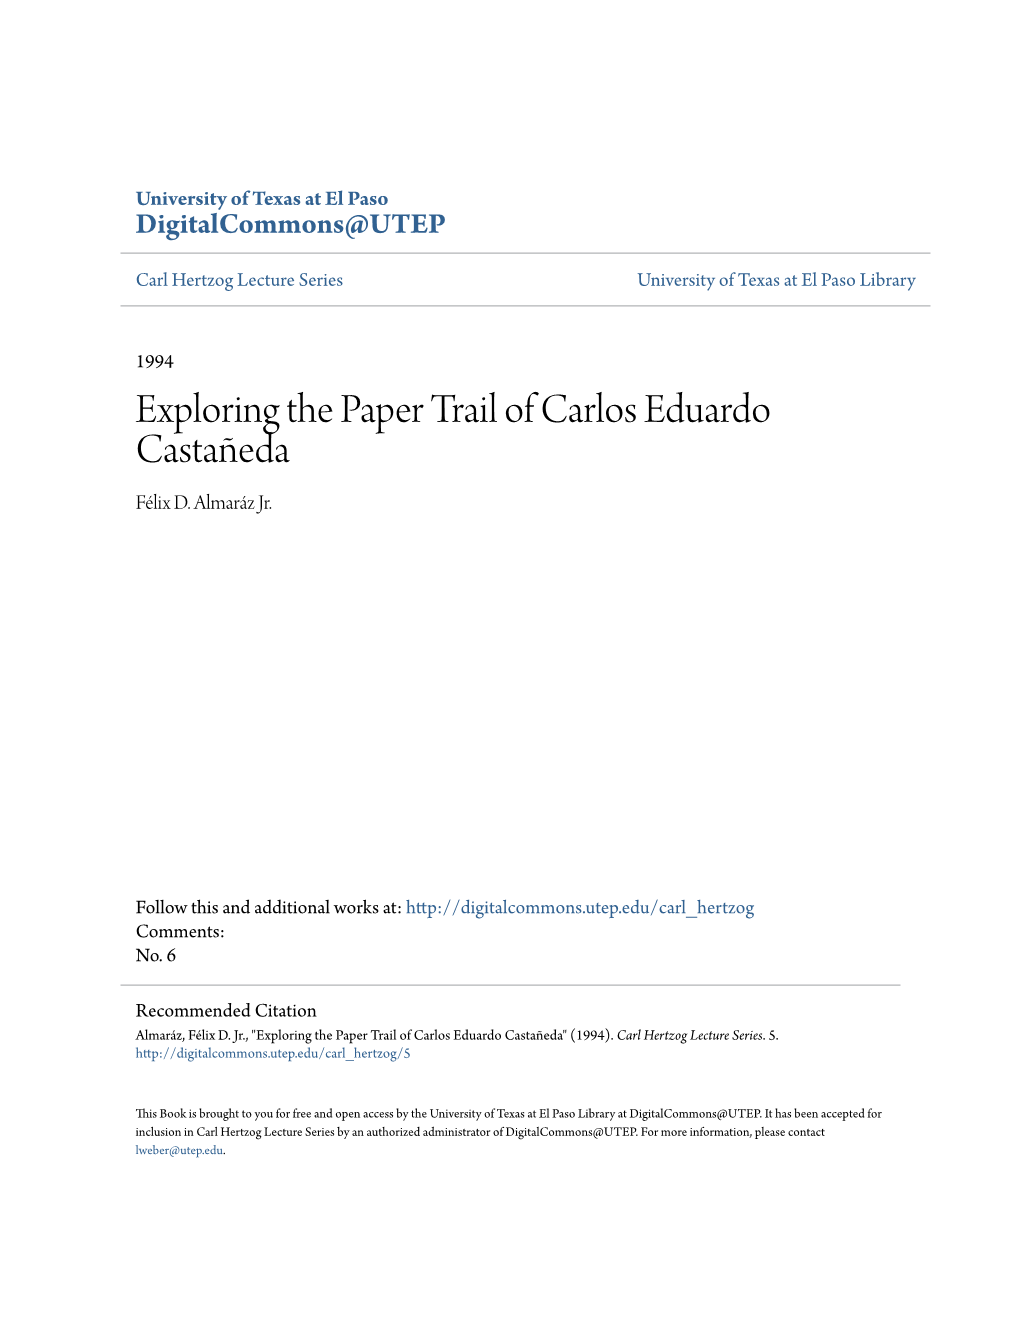 Exploring the Paper Trail of Carlos Eduardo Castaã±Eda